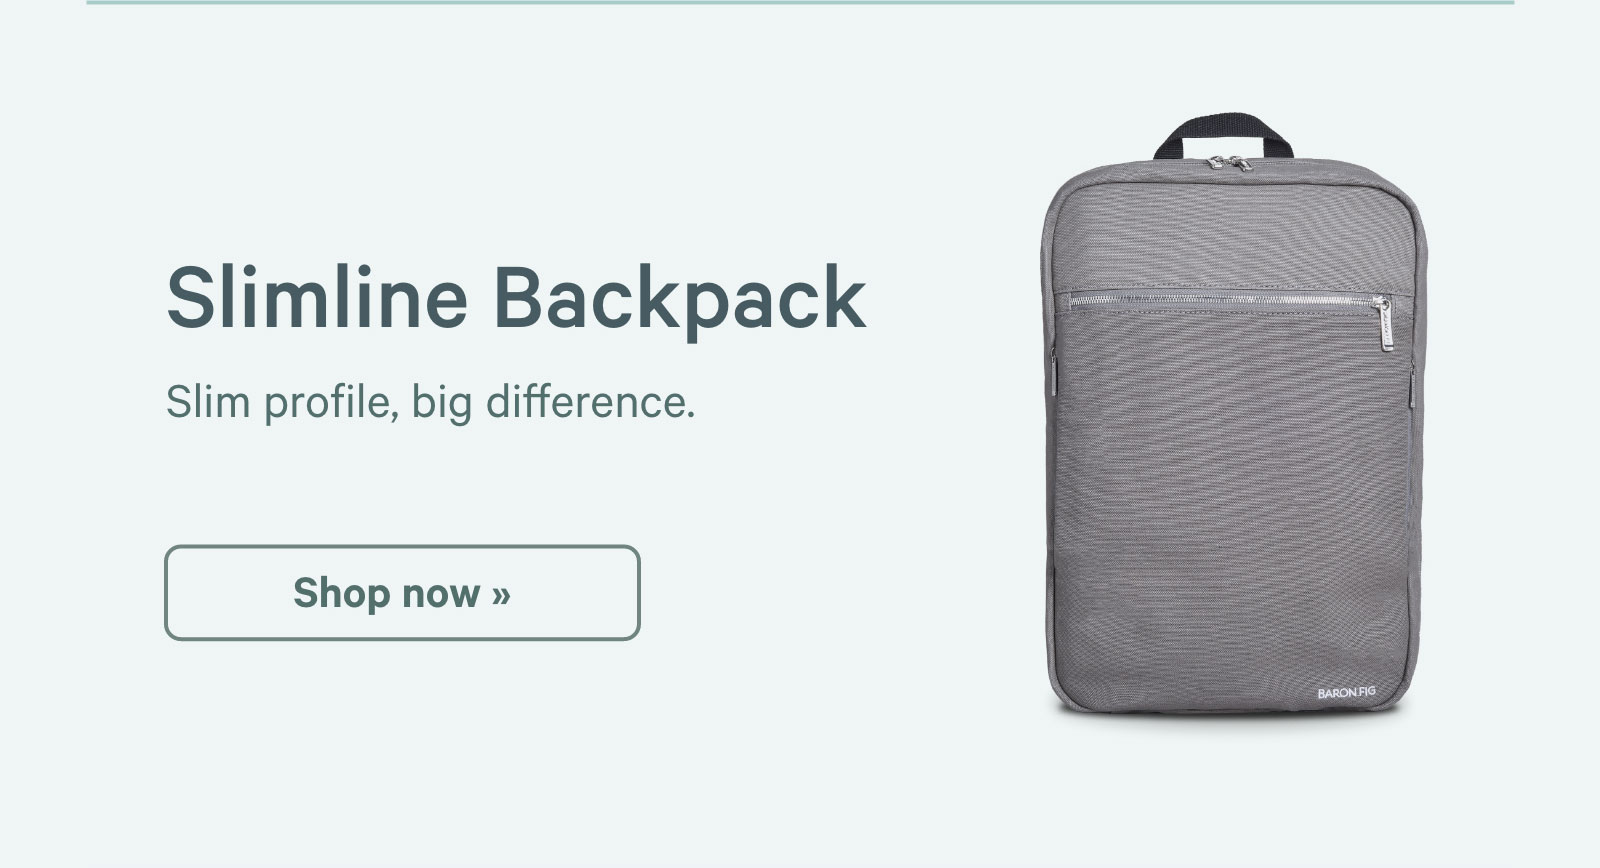 Slimline Backpack. Slim profile, big difference. Shop now ?